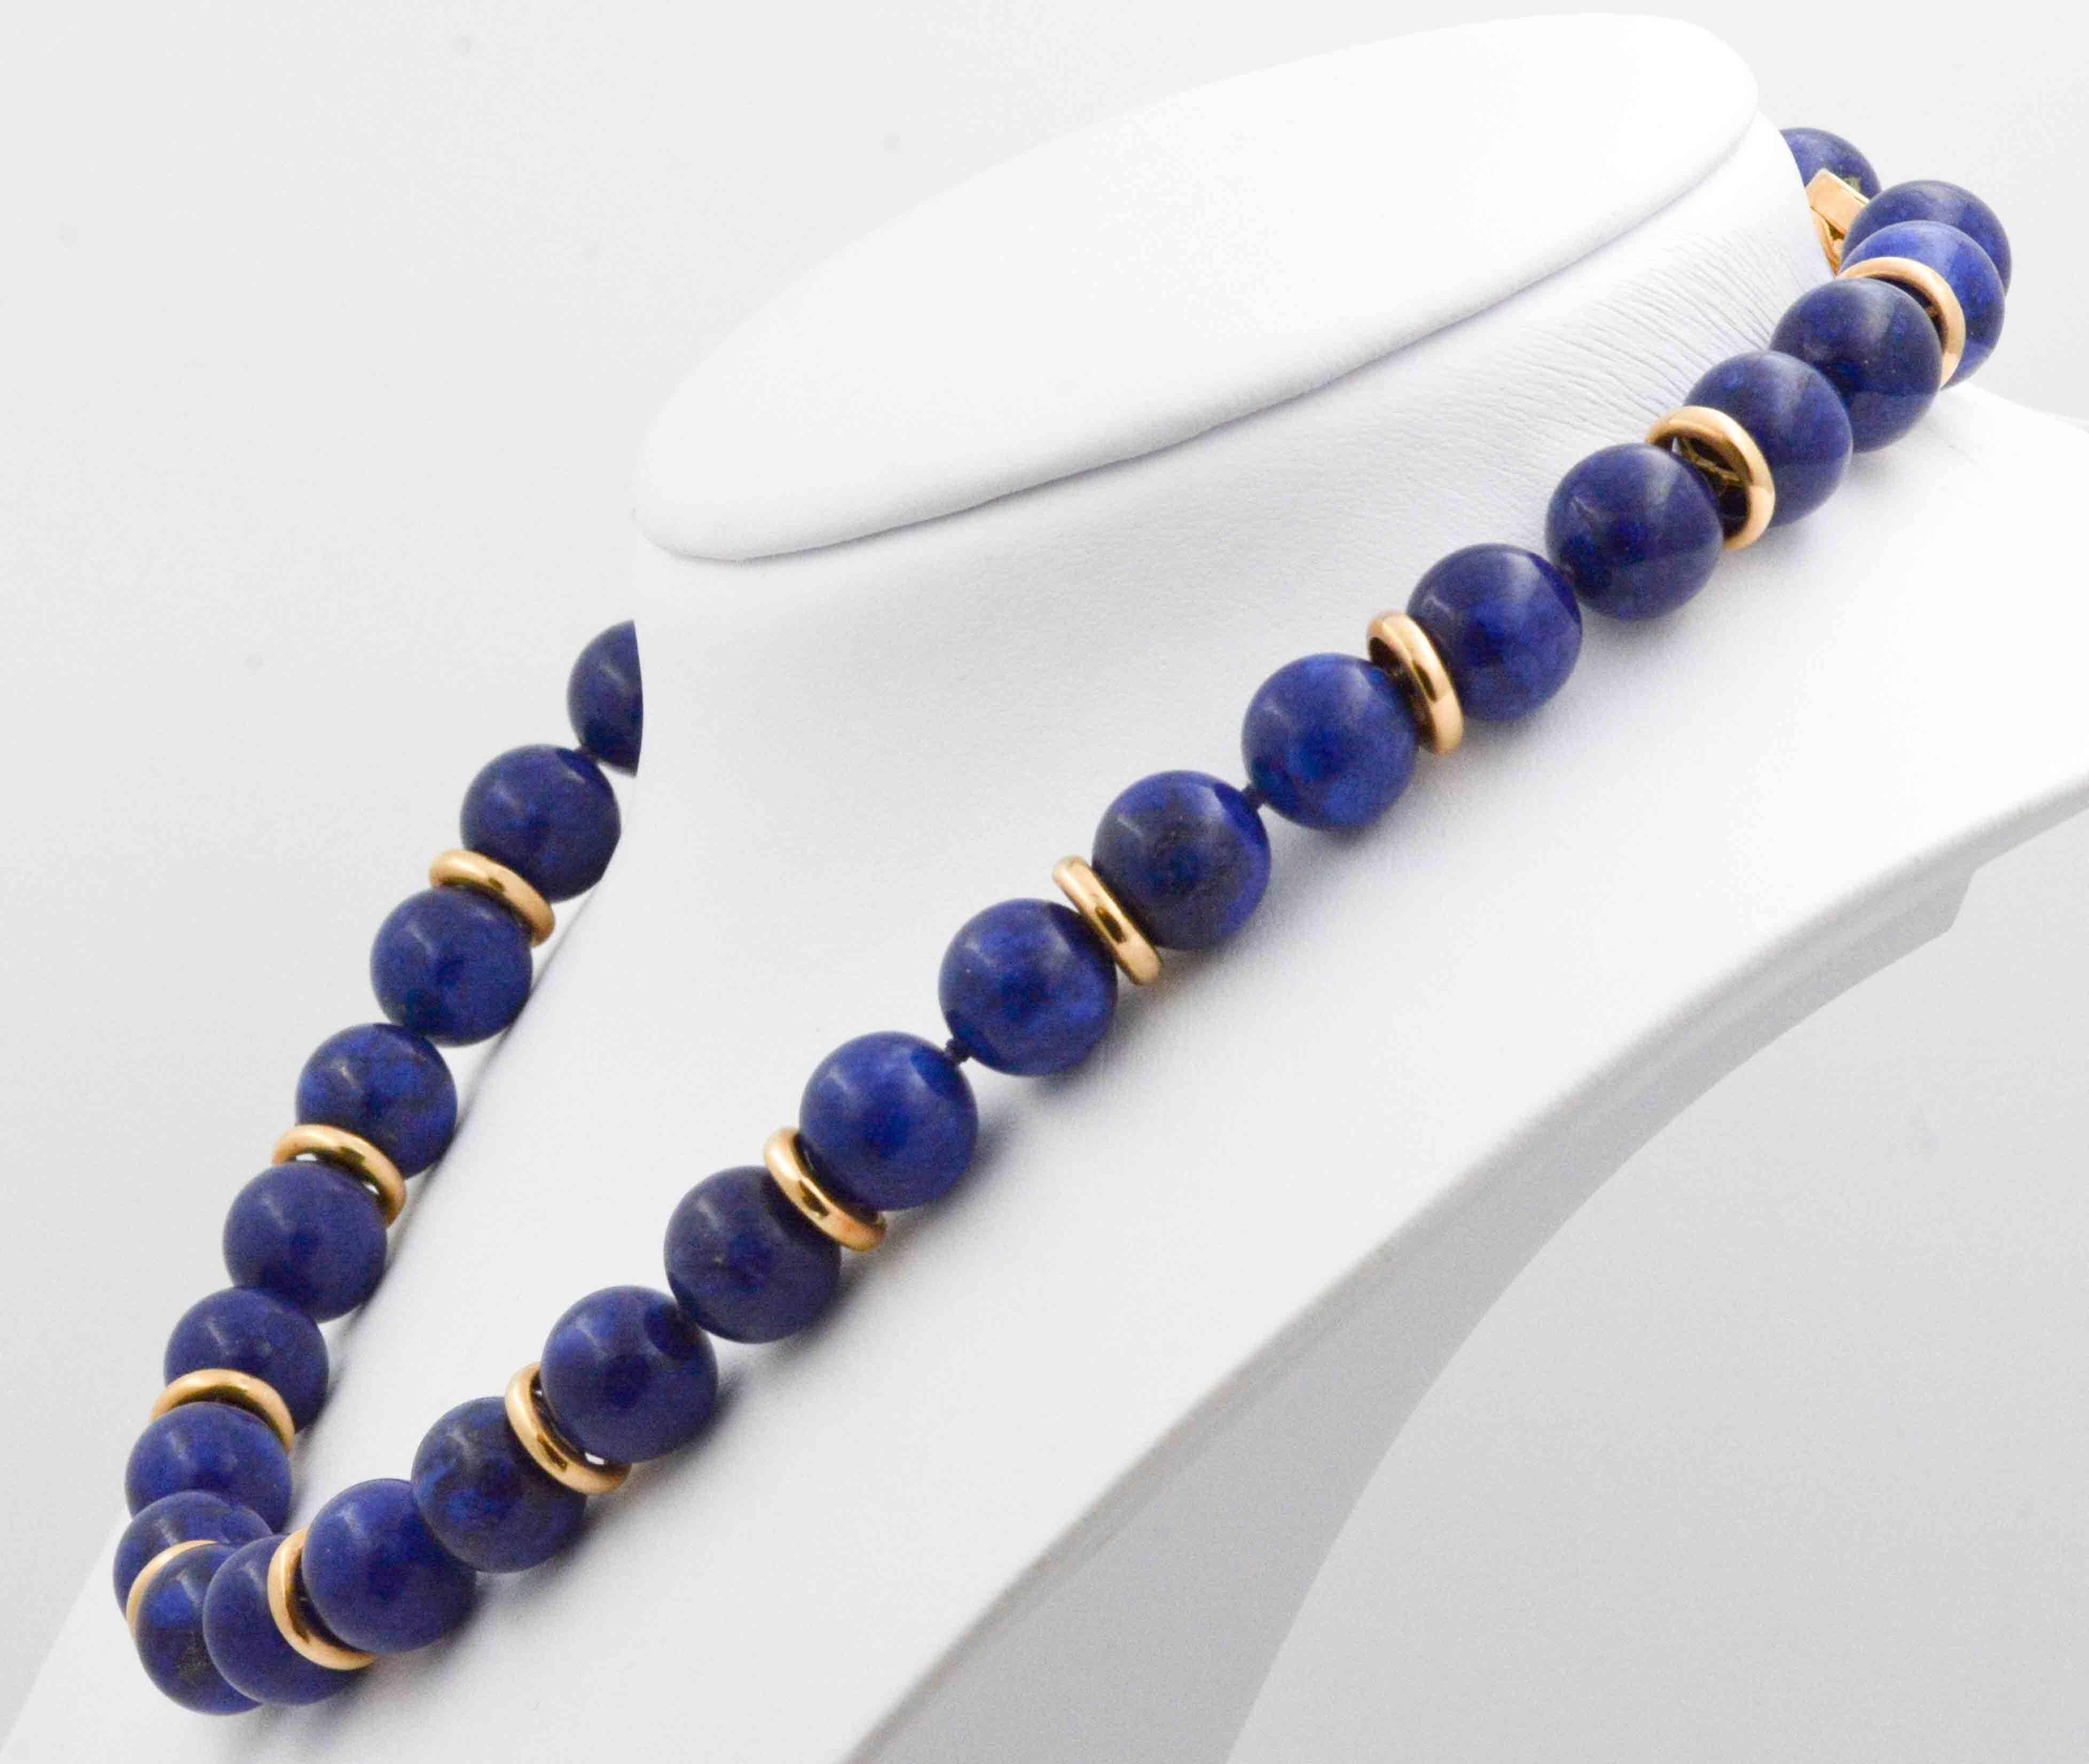 Modern Lapis Lazuli Bead Necklace with 14 Karat Yellow Gold